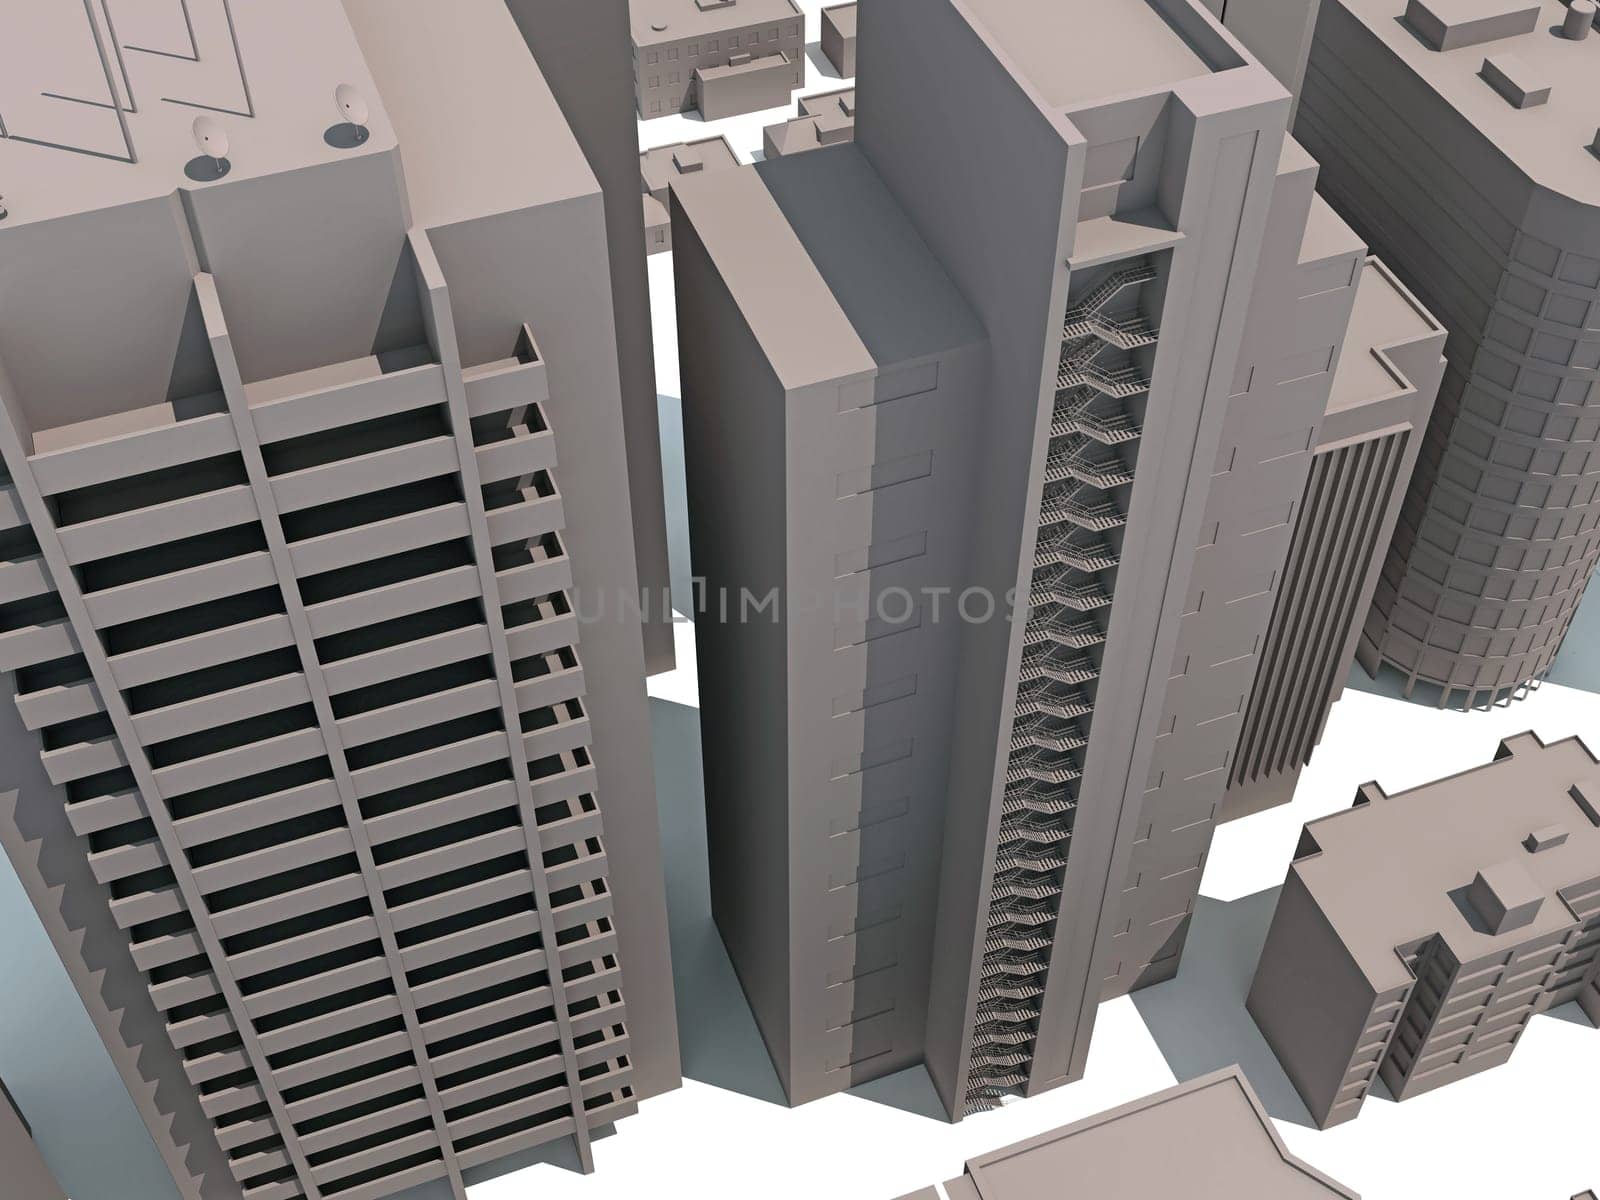 City Buildings 3D rendering model on white background